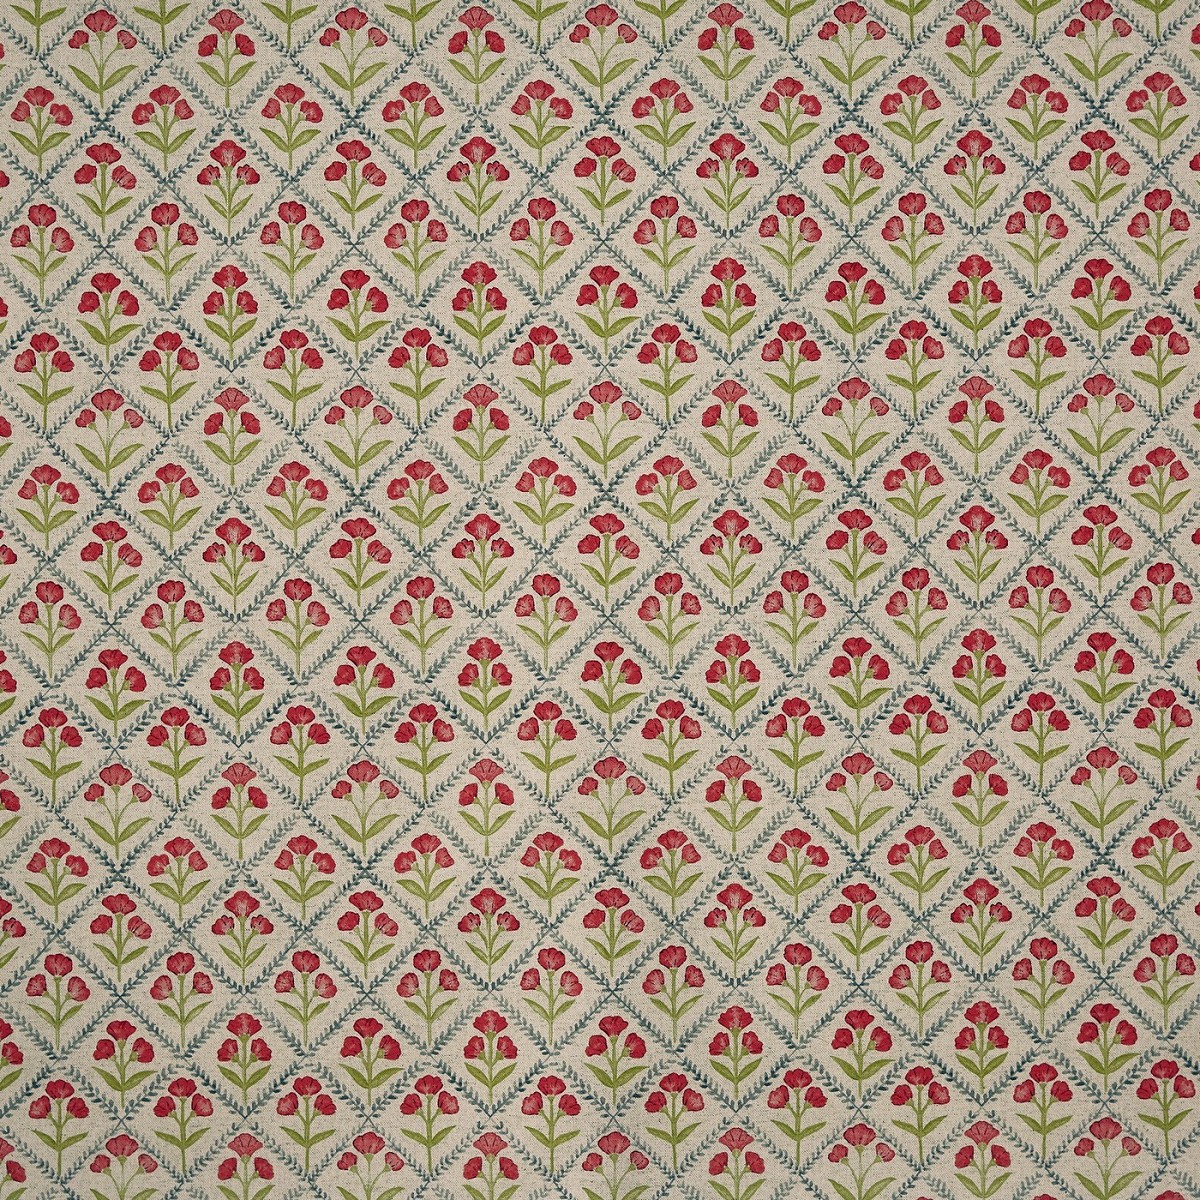 Chatsworth Poppy Fabric by Prestigious Textiles